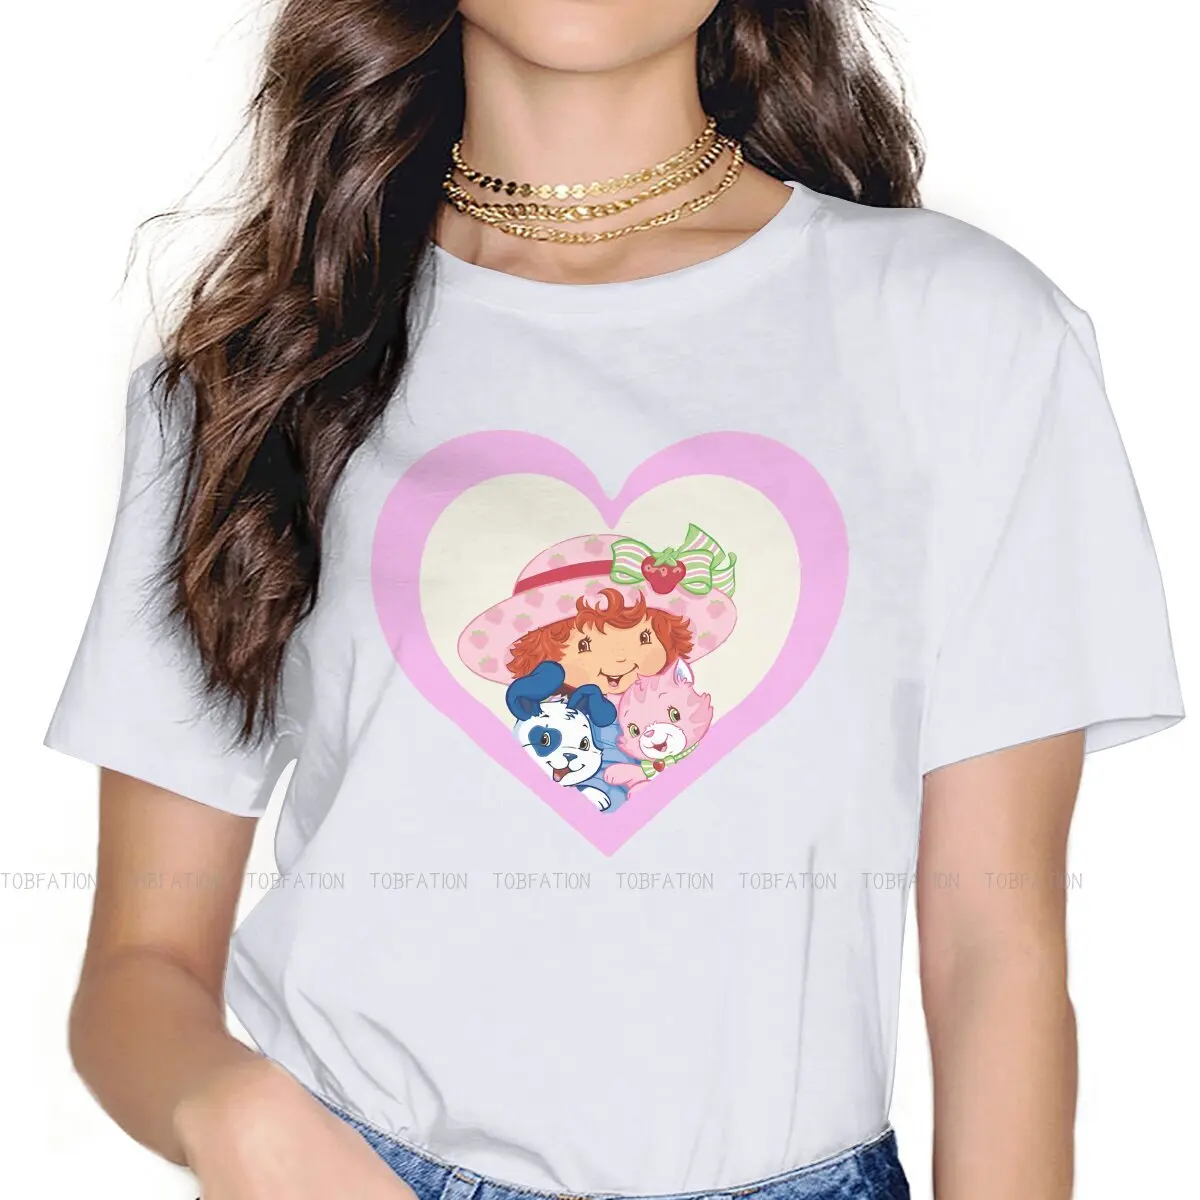 Camiseta con diseño de pastel de fresas para niña, Tops para mujer, Harajuku Kawaii, camiseta de gran tamaño 4XL para mujer